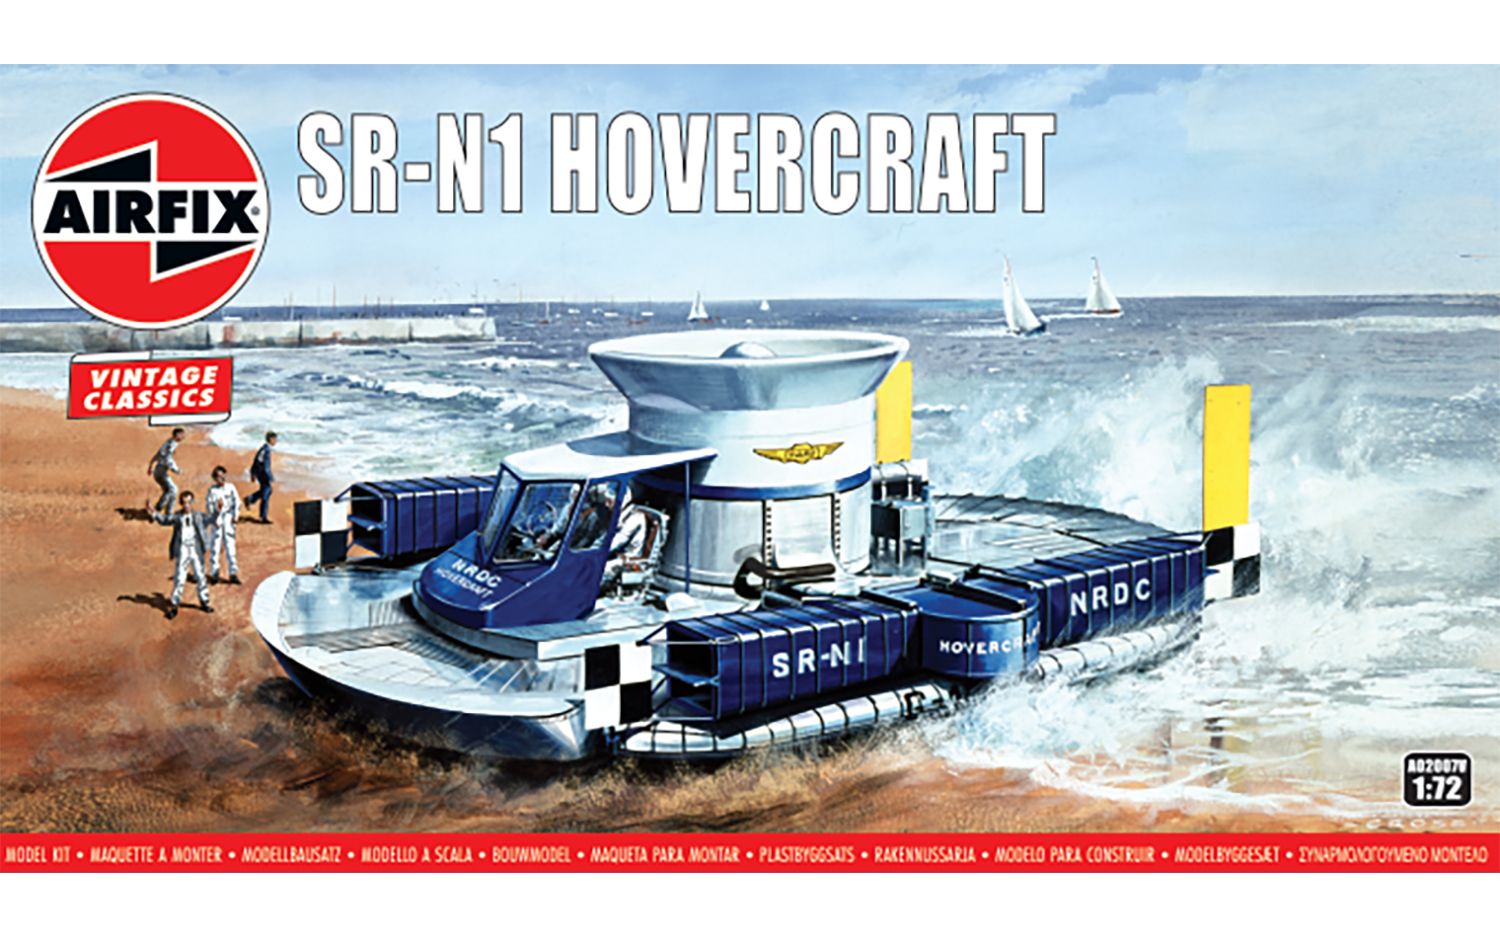 Airfix SR-N1 Hovercraft 1:72 Scale